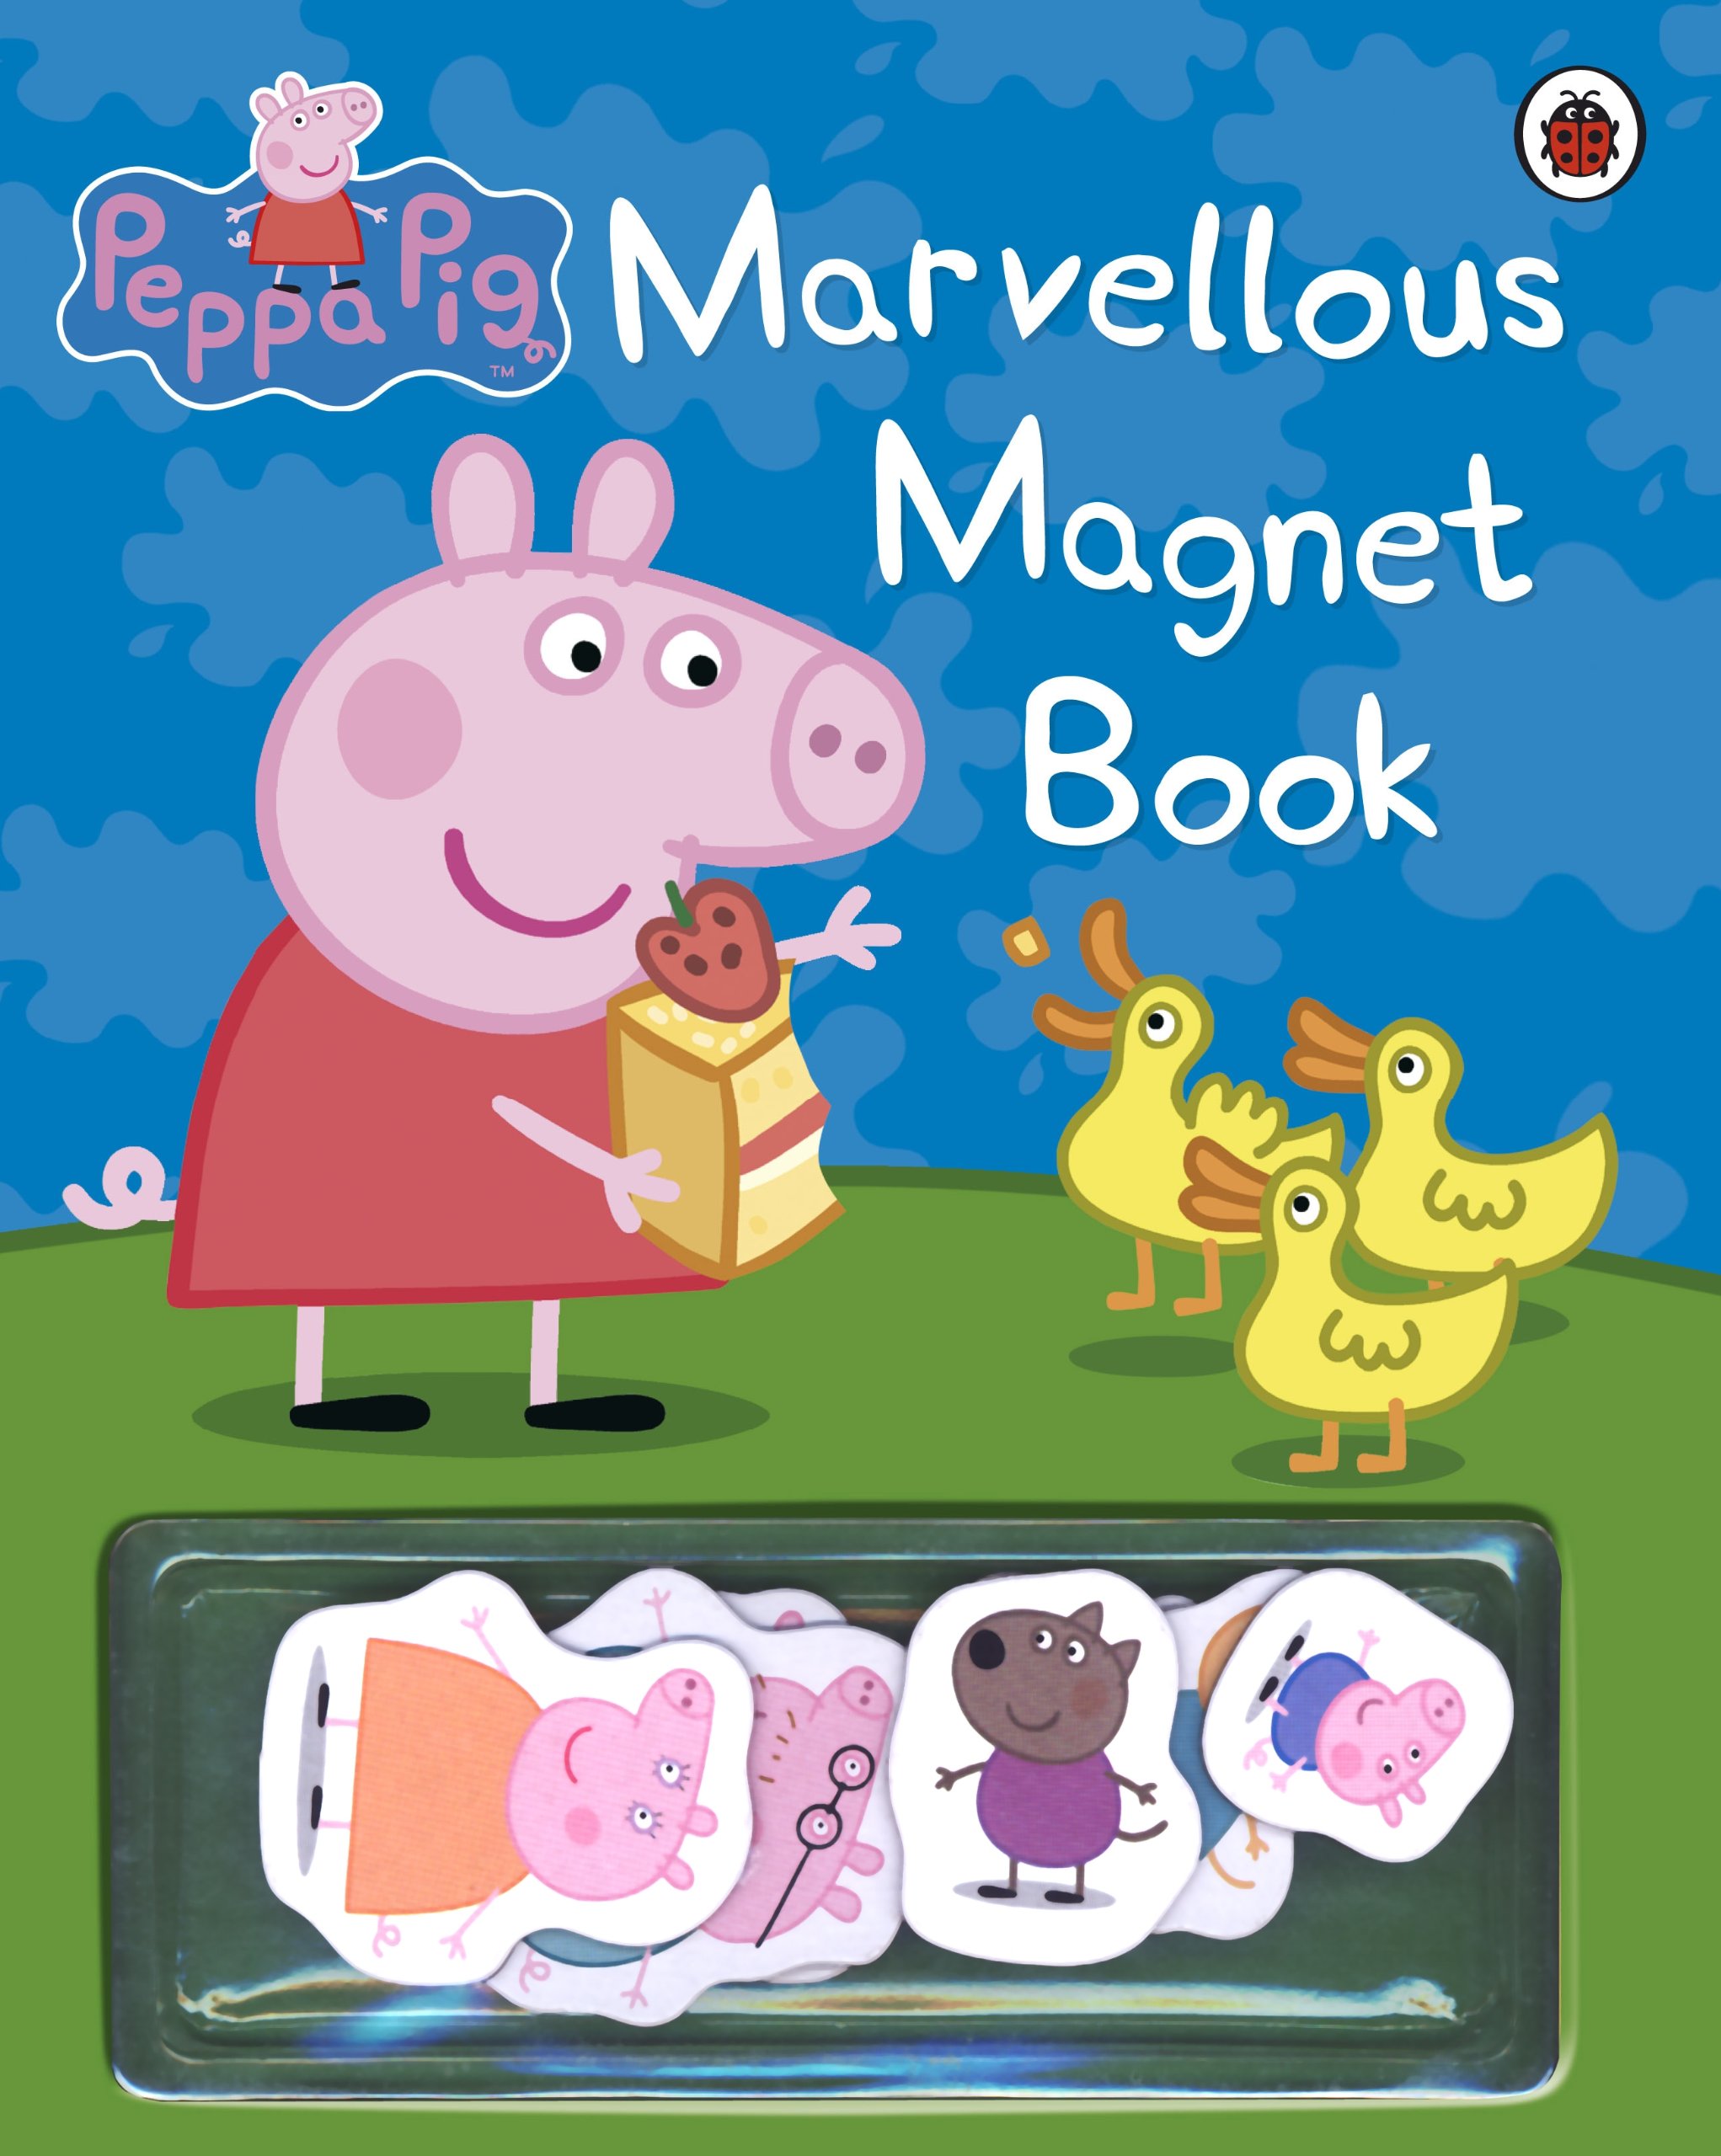 【peppa pig】marvellous magnet book,【粉红猪小妹】不可思议的磁铁